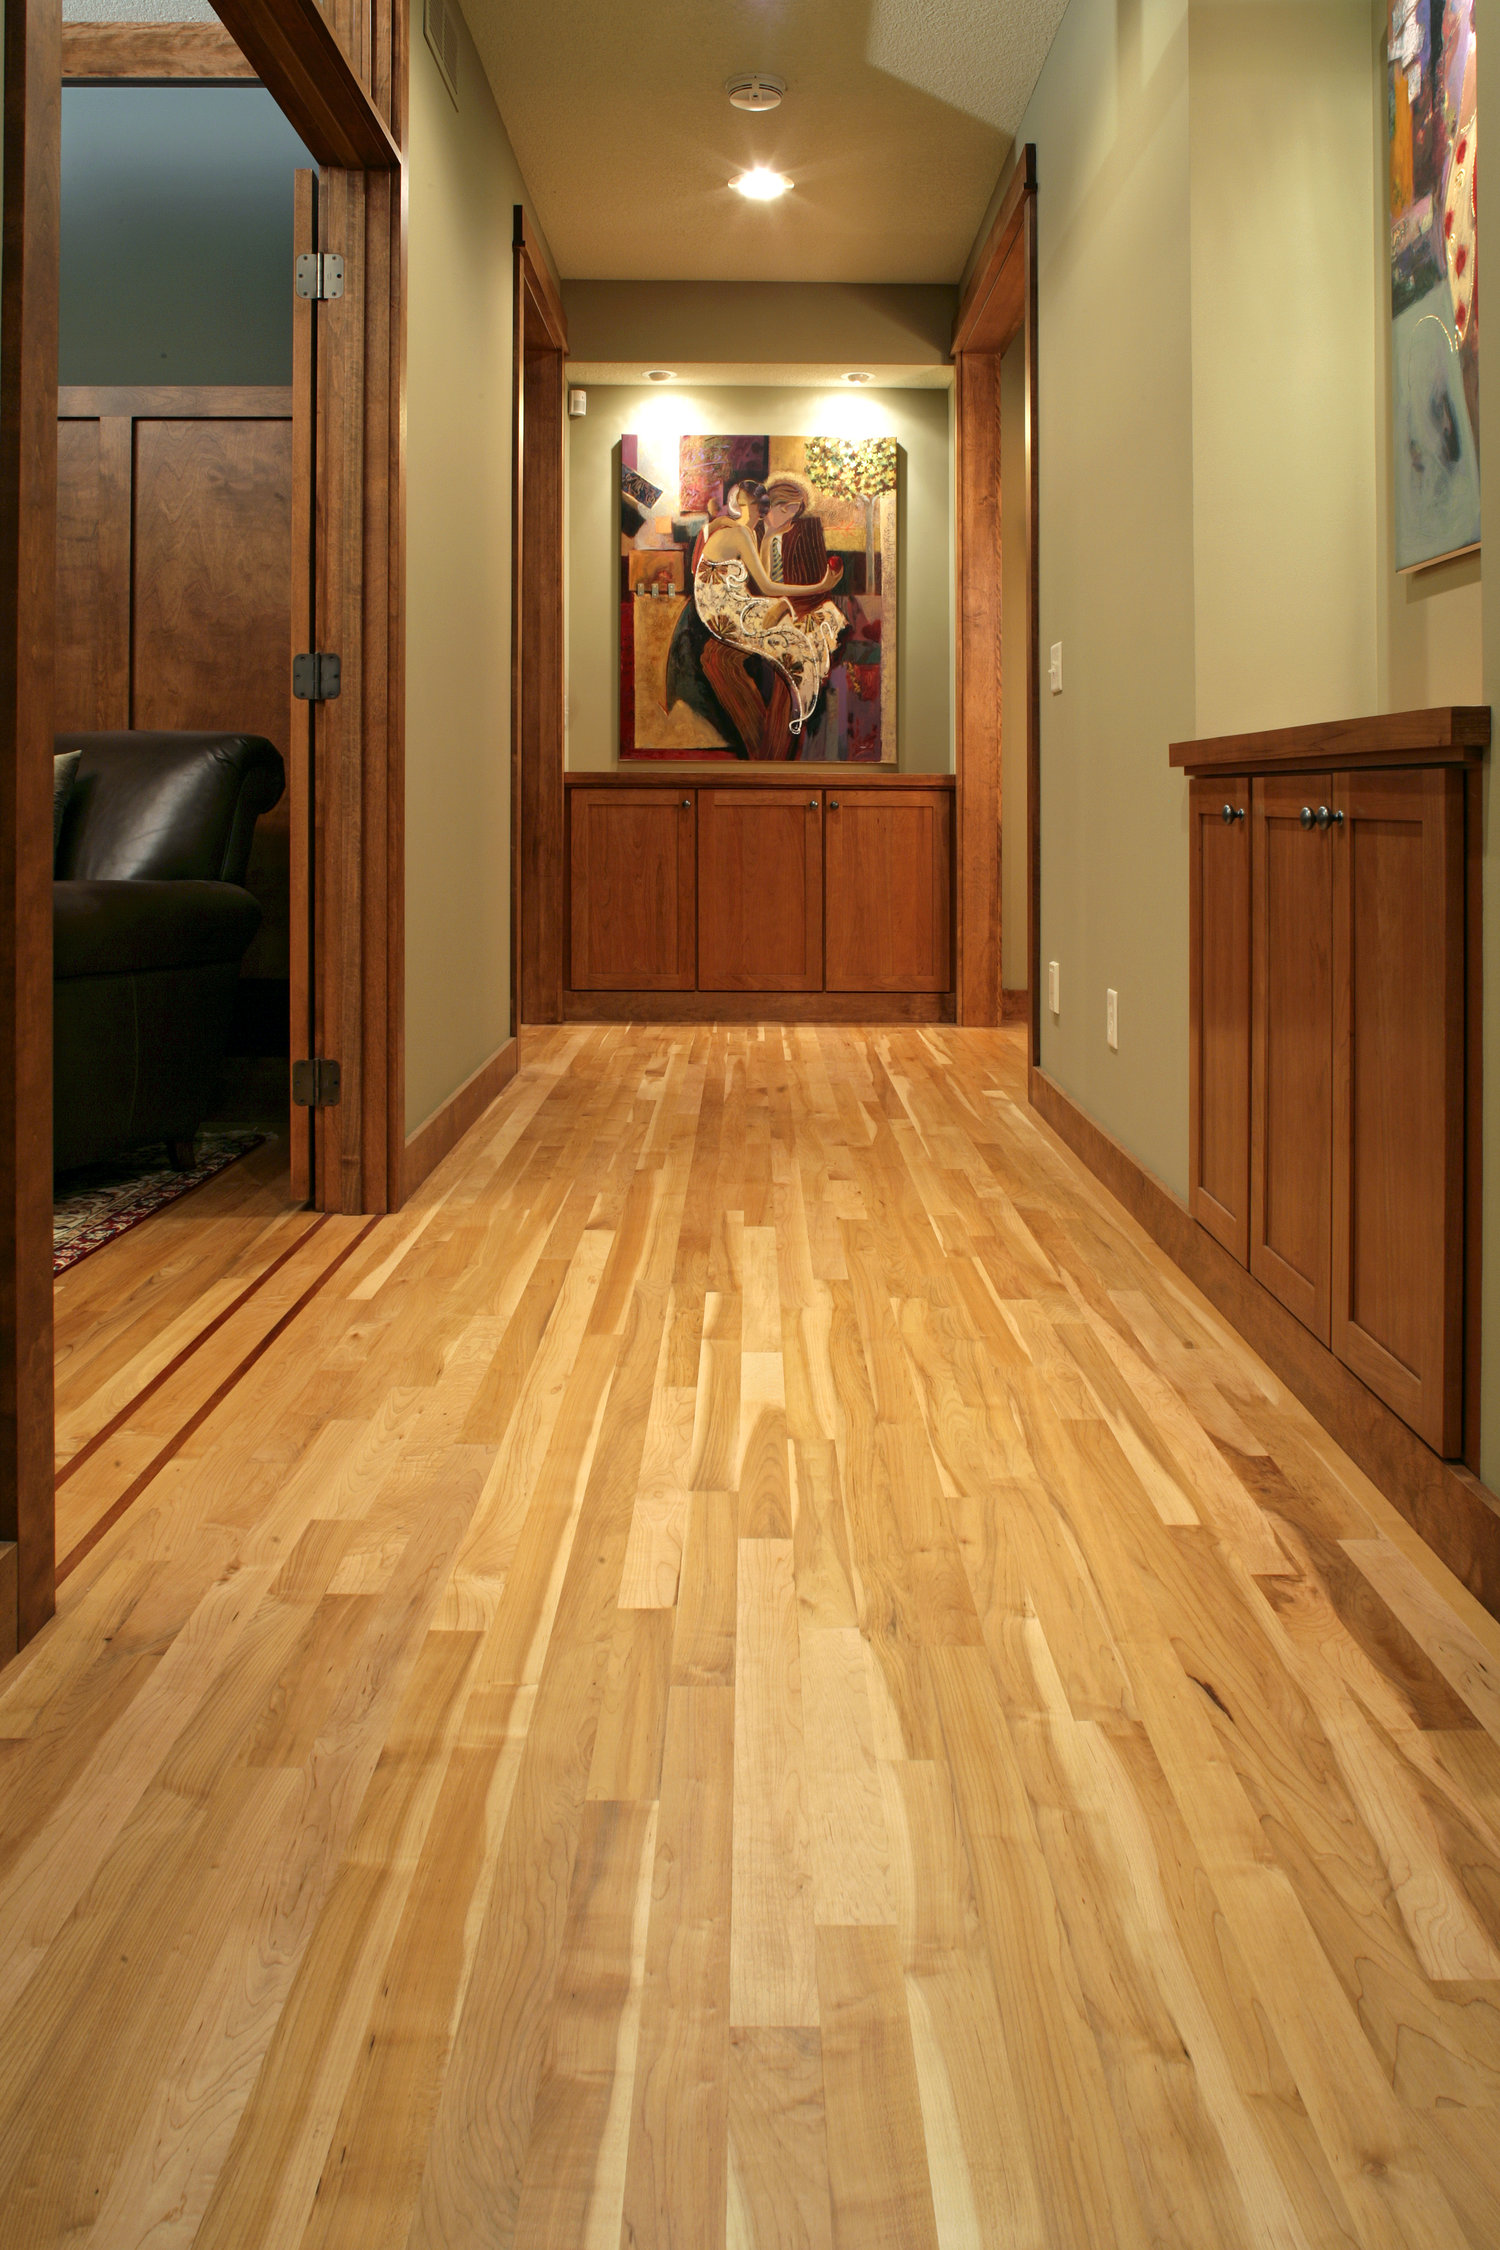 Our Story North Wood Flooring, Michigan Hardwood Flooring